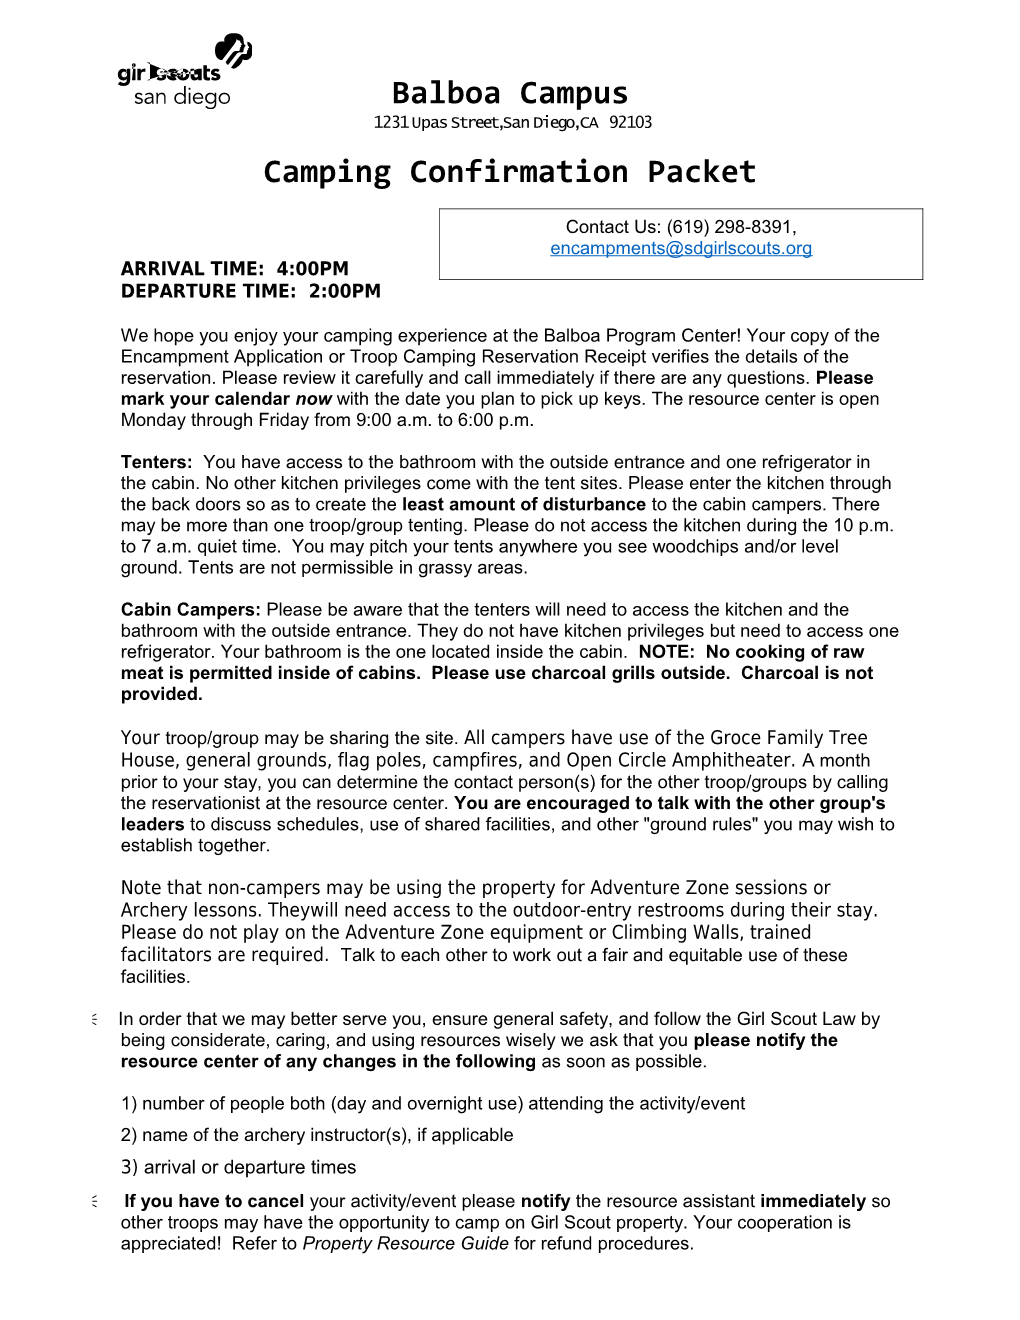 Balboa Program Center Camping Confirmation Packet s1